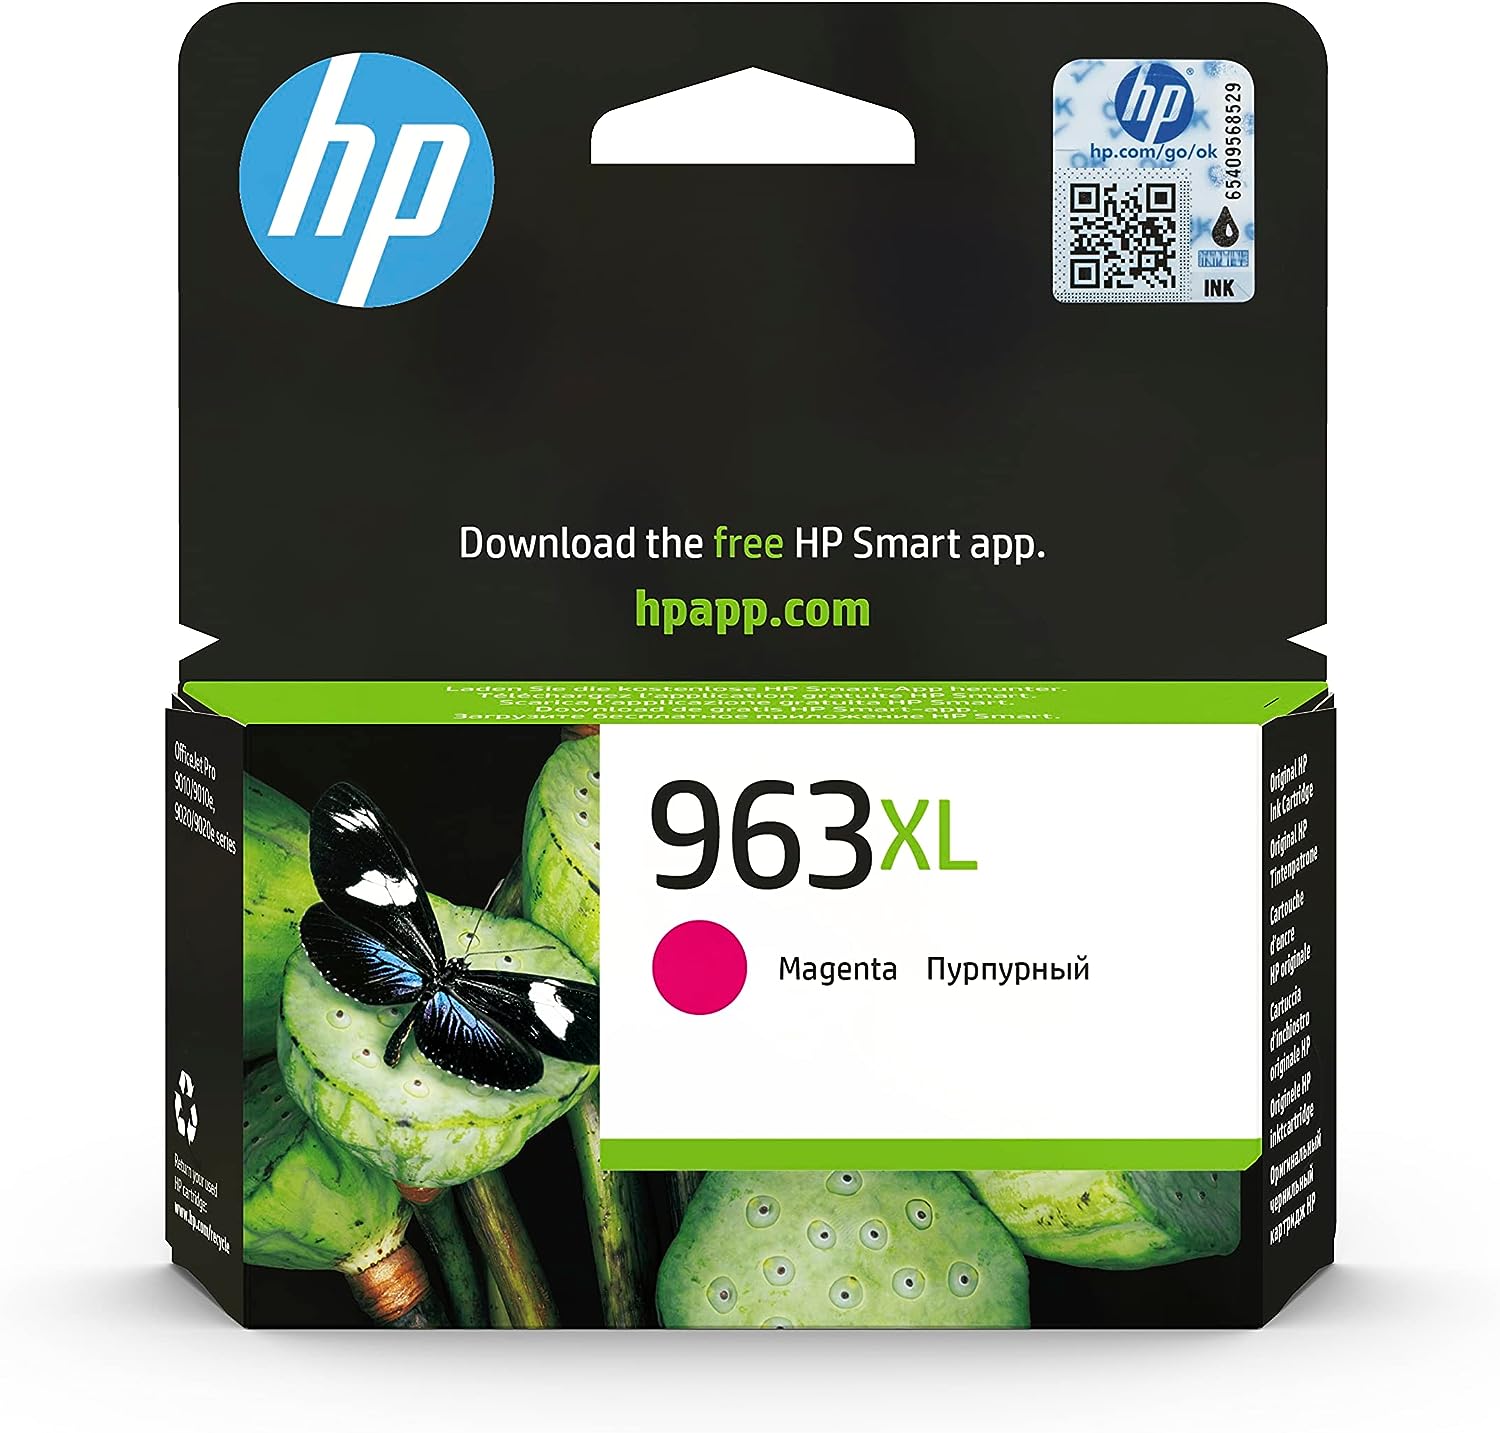 HP 963XL Ink Cartridge for HP Printers, Magenta - 3JA28AE